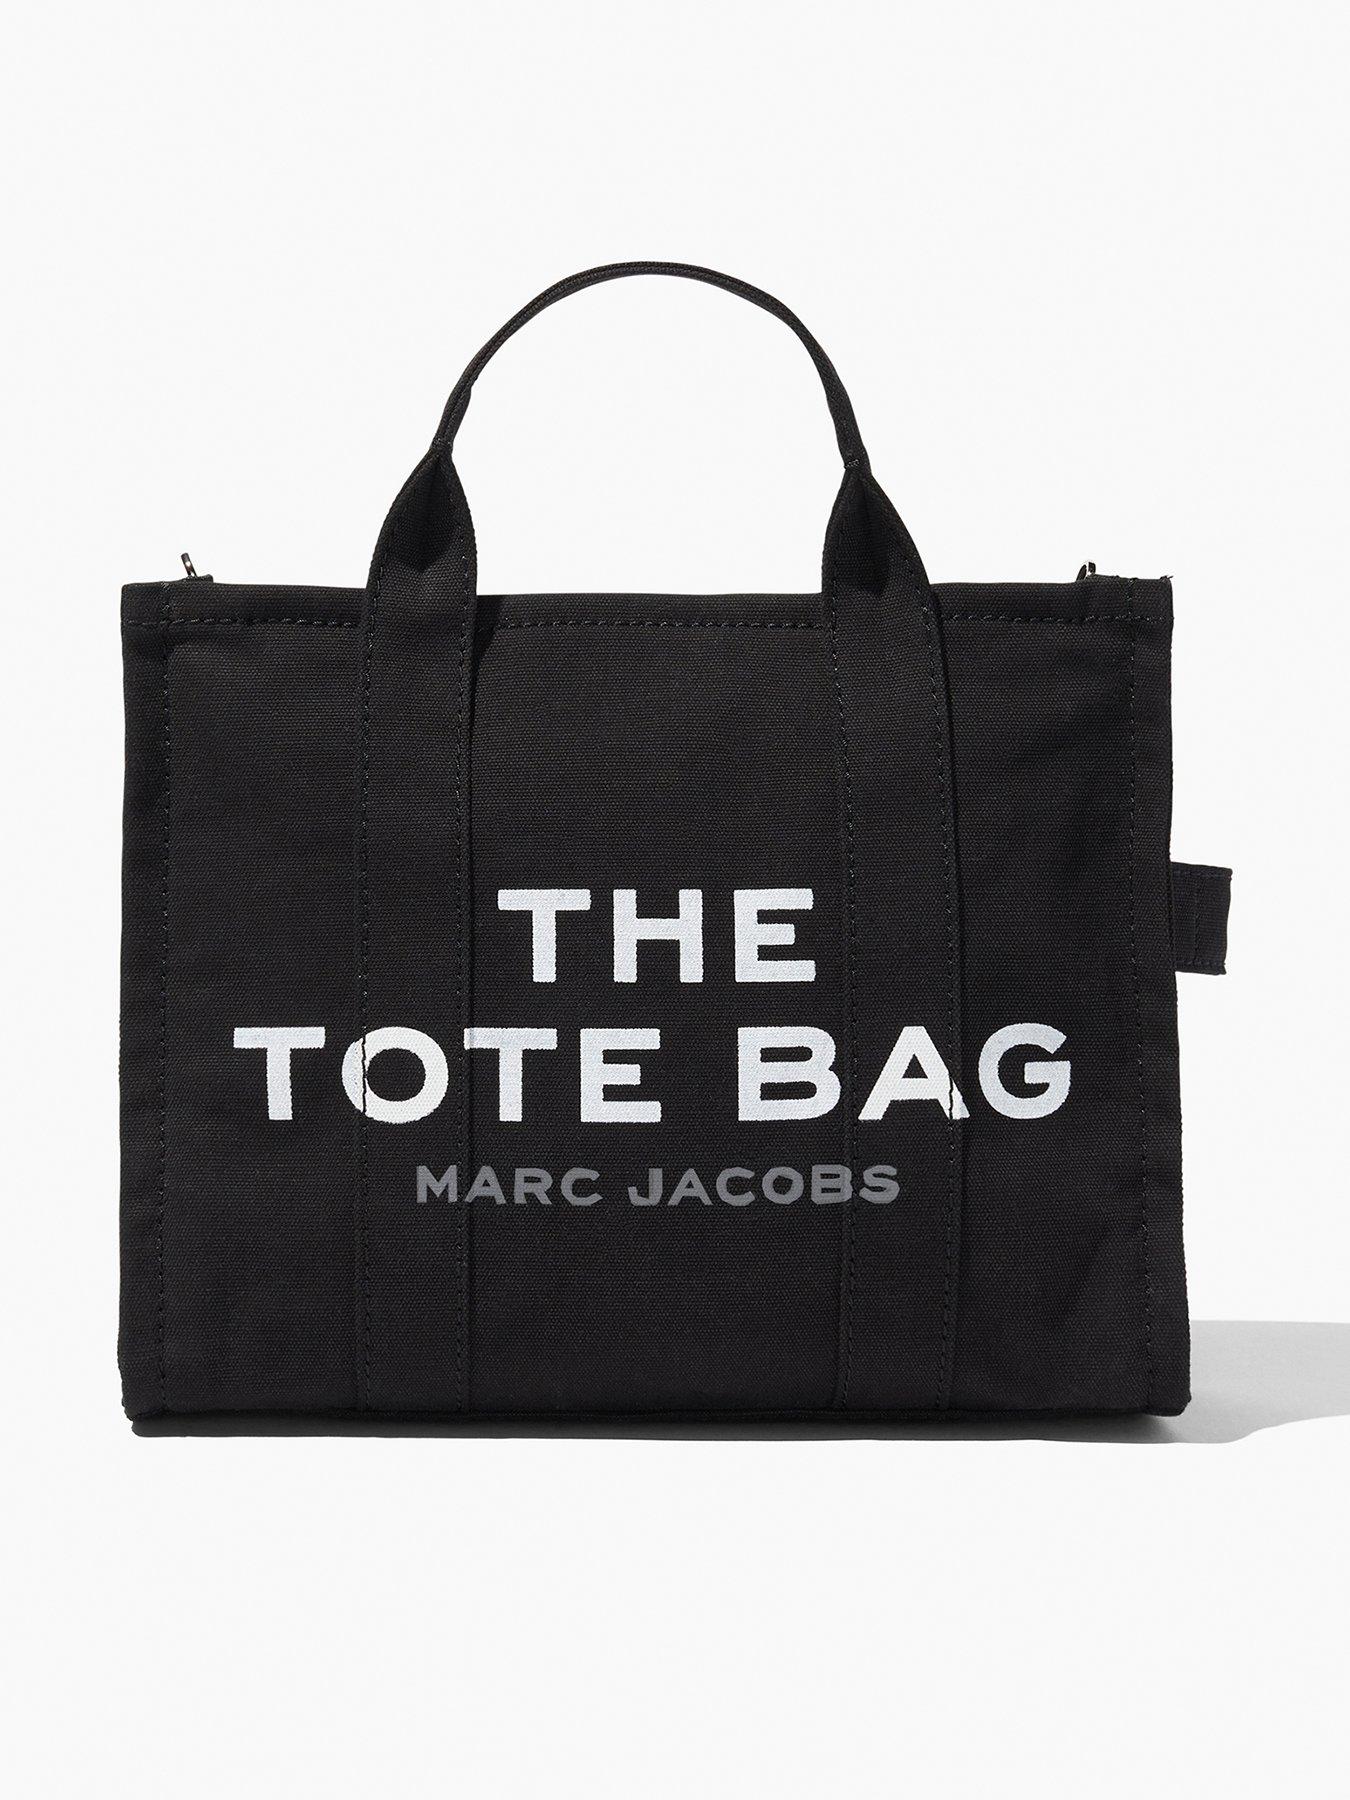 The Mini Cushion Bag by Marc Jacobs Handbags for $73